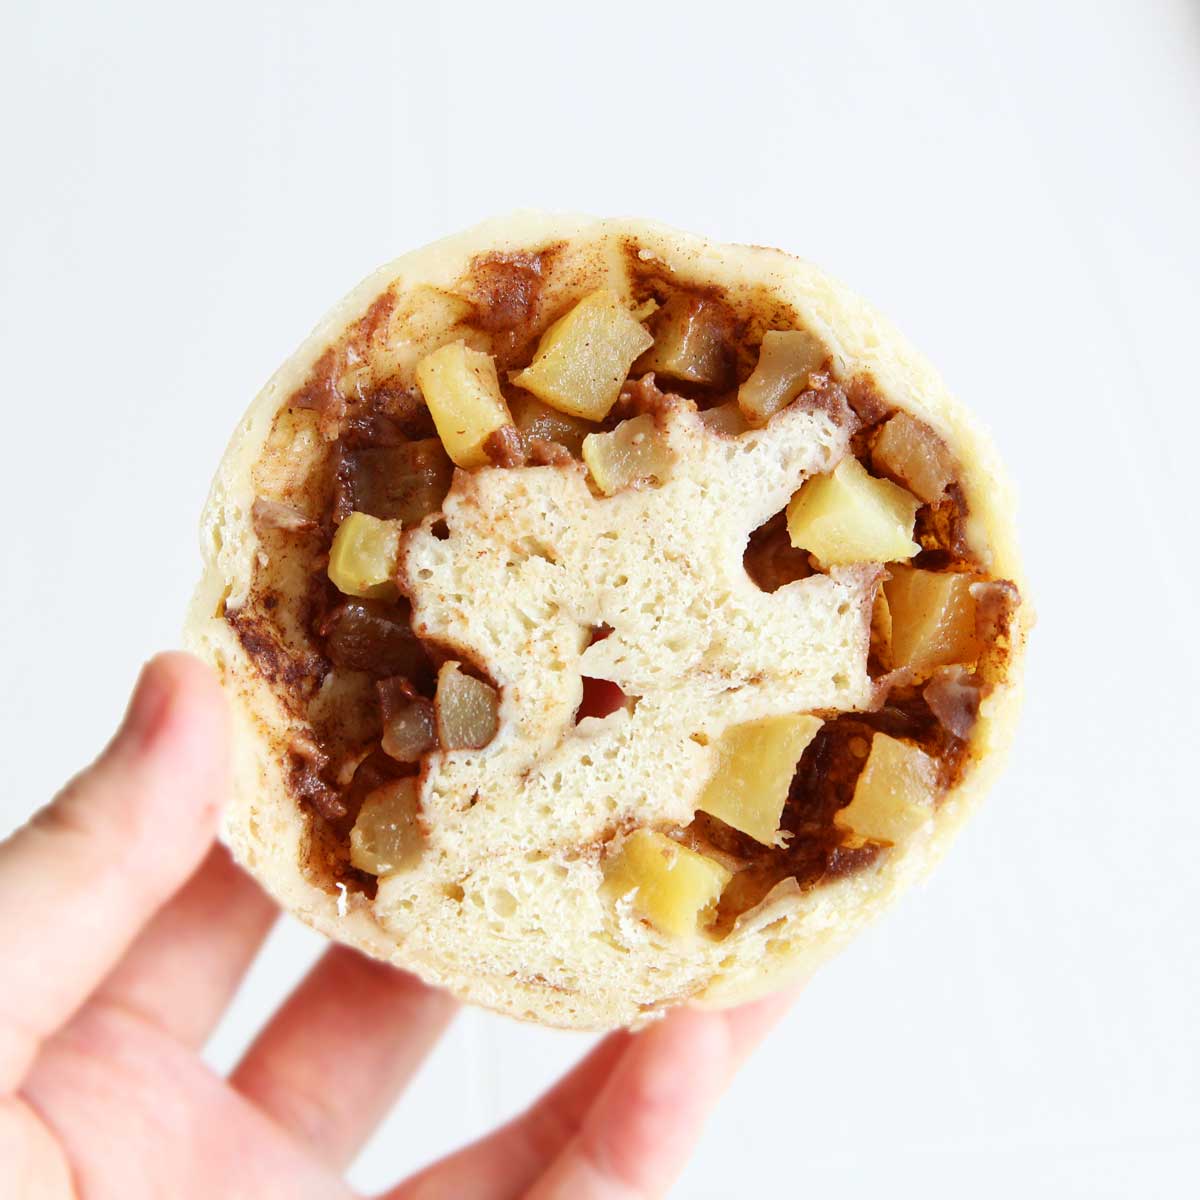 How to Make Healthier Japanese Obanyaki Pancakes (Made with Applesauce) - applesauce pancakes